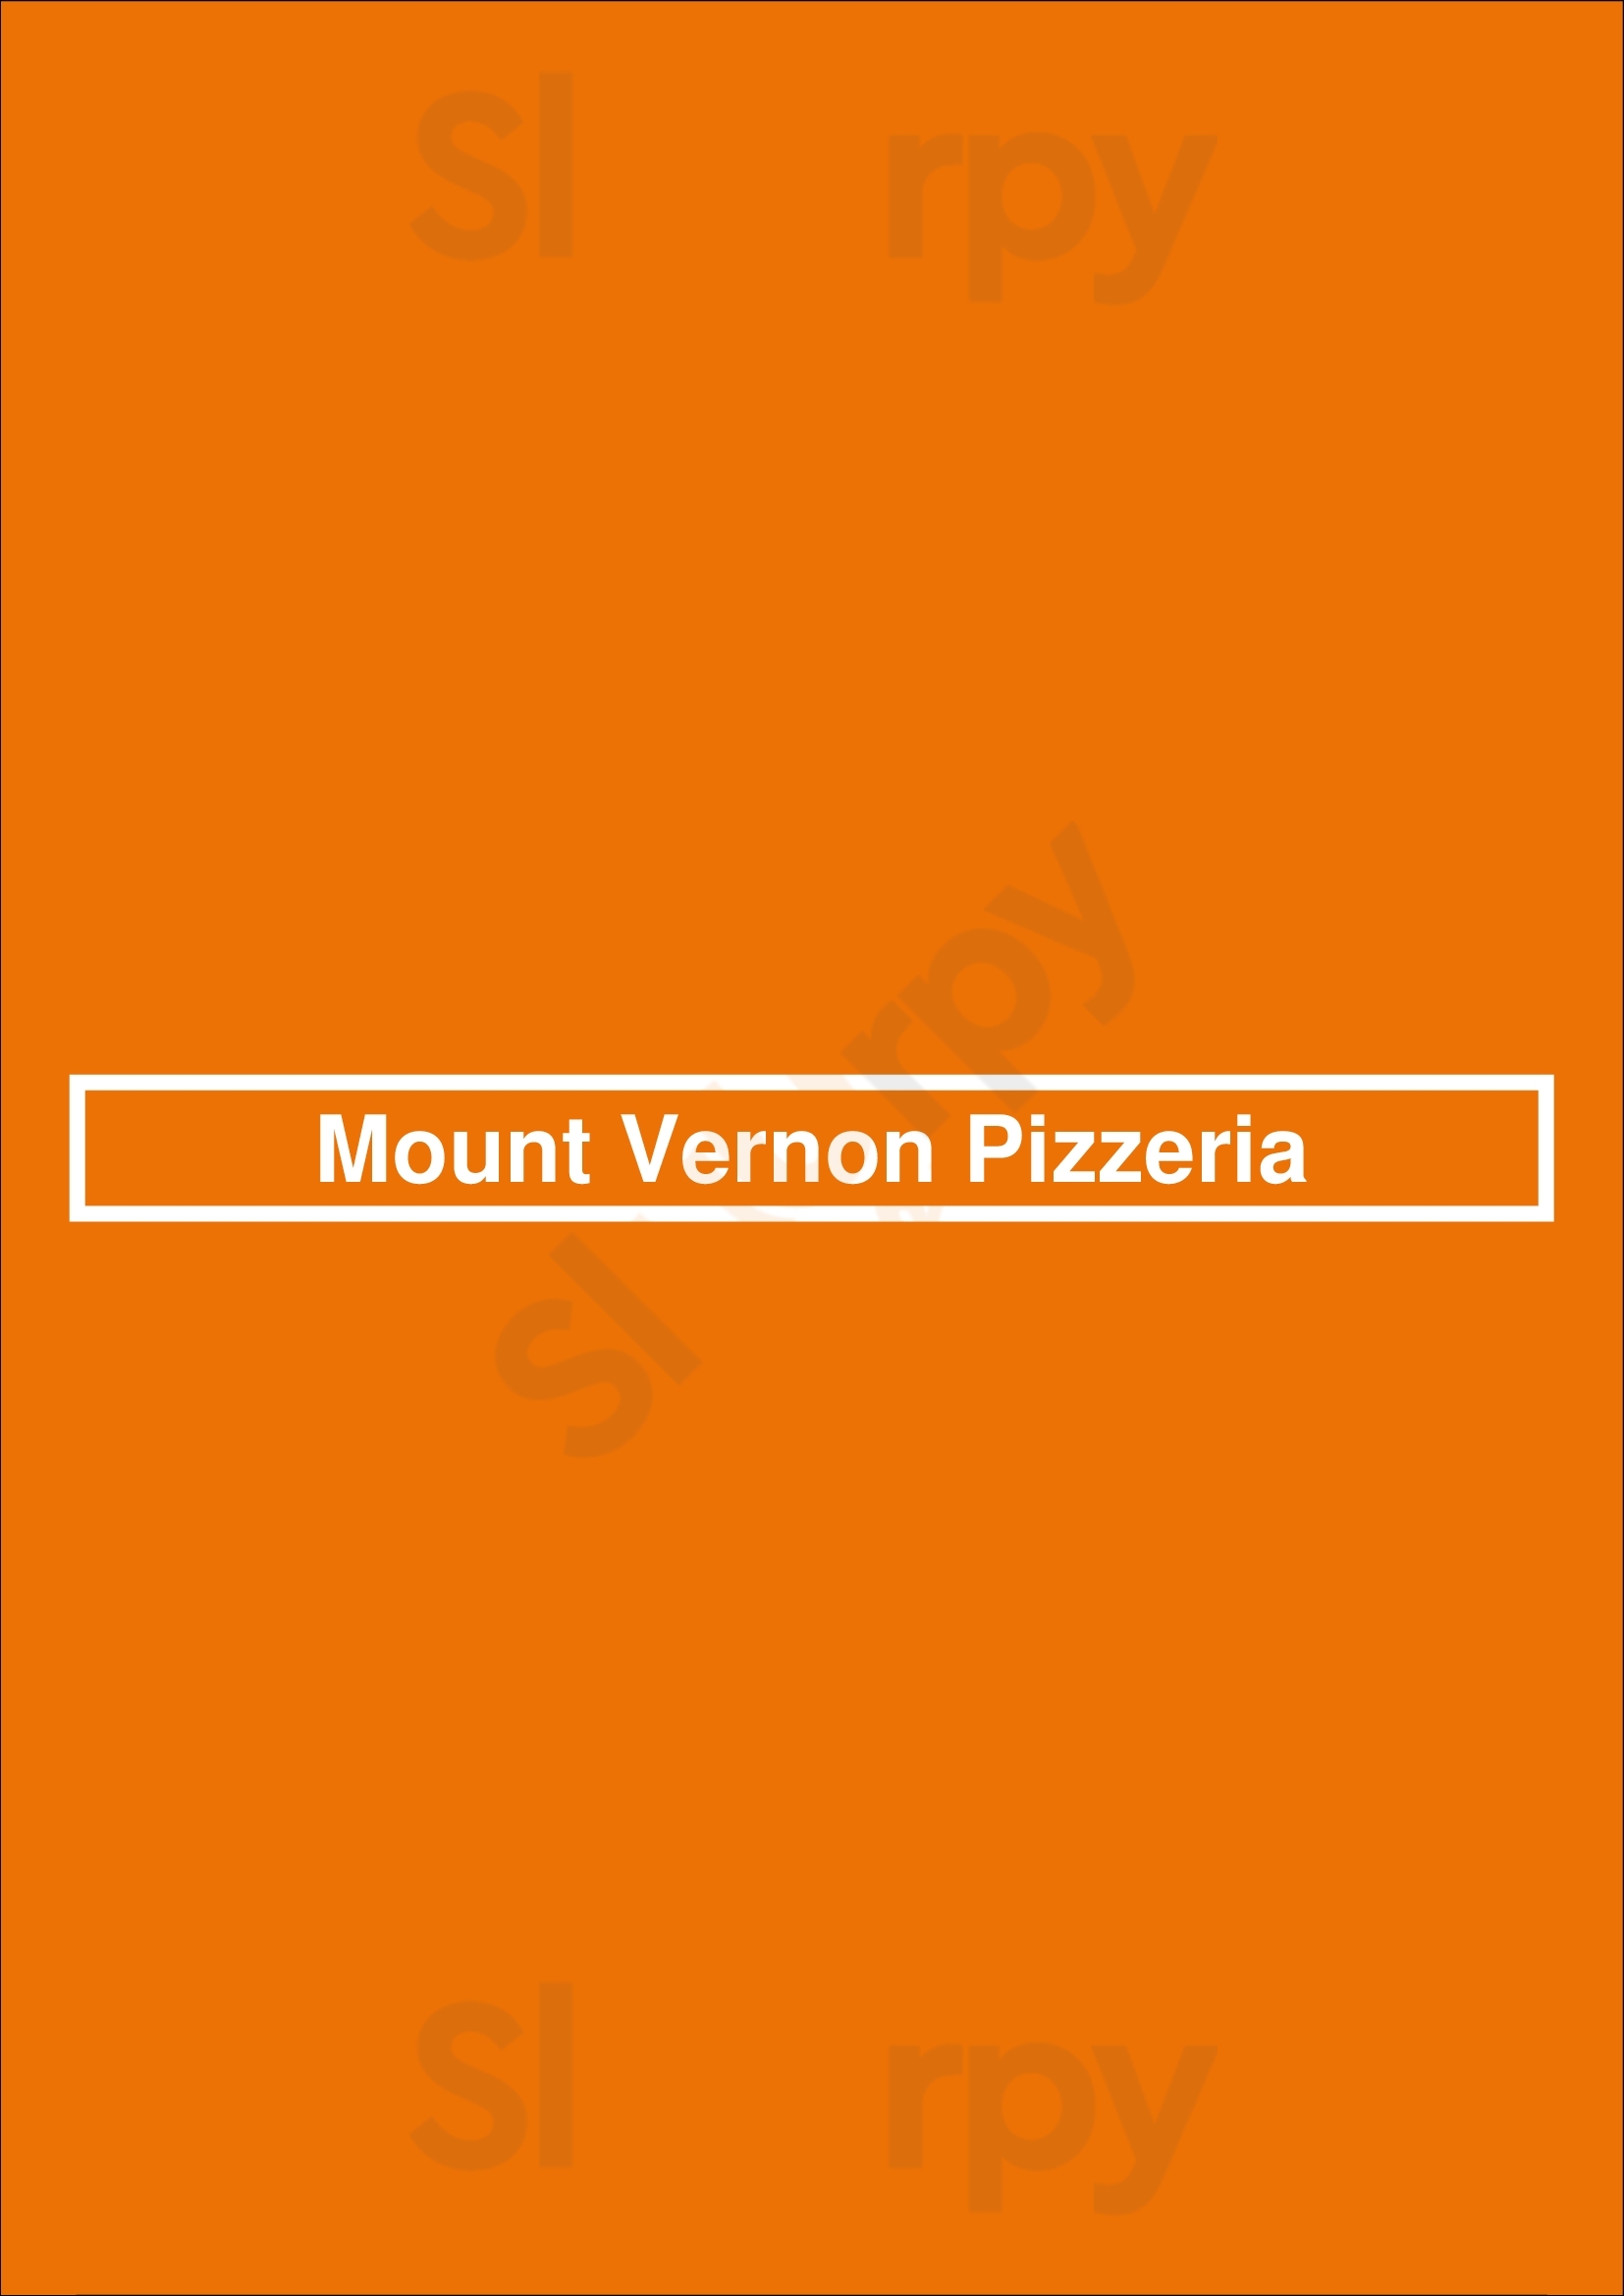 Mount Vernon Pizzeria Baltimore Menu - 1